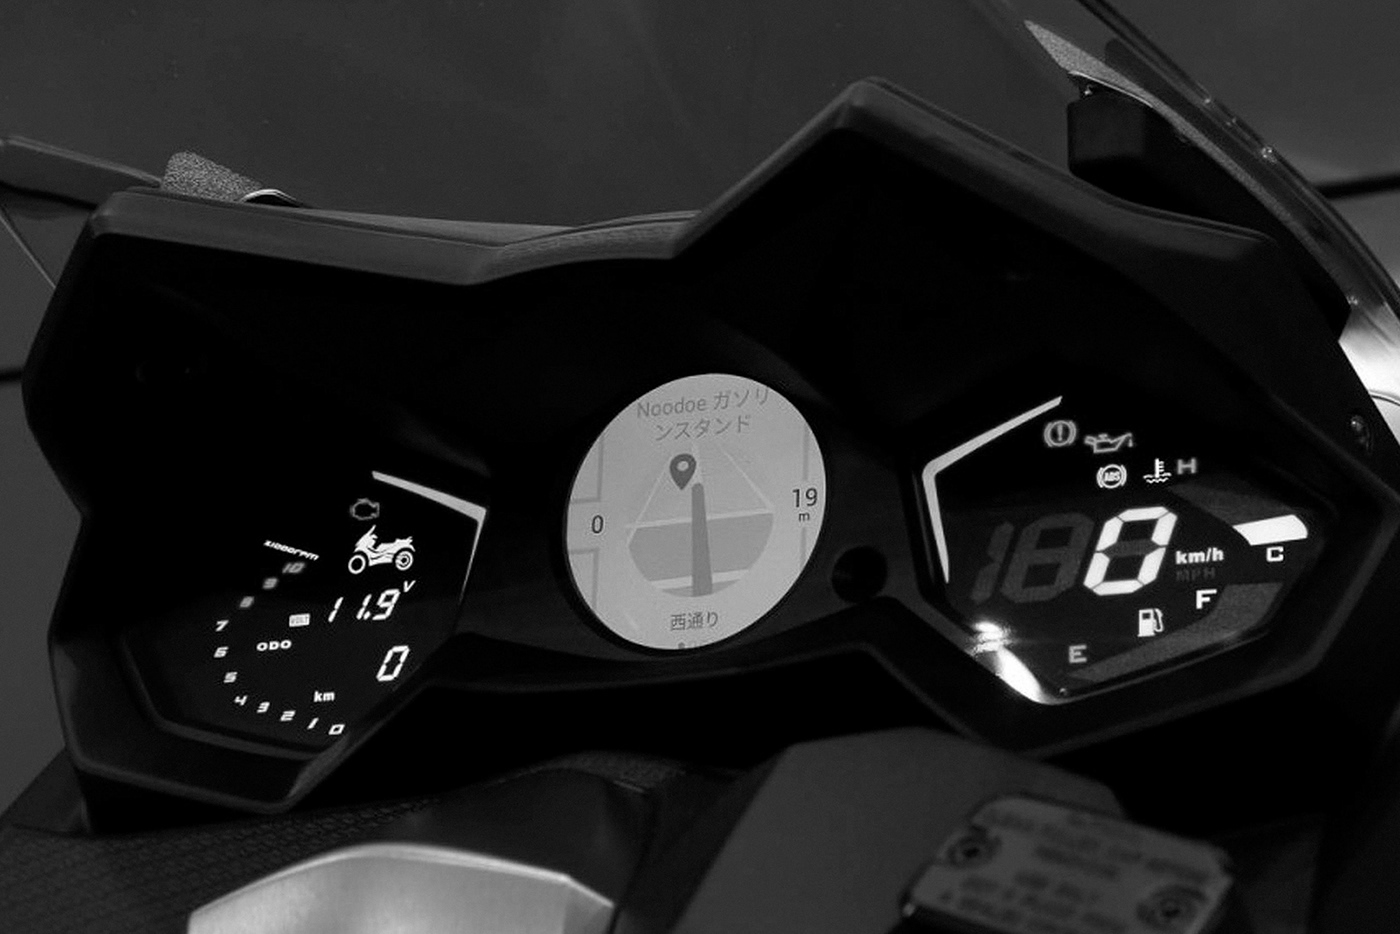 kymco Icon barcelona moto motocycle noodoe app red black gray